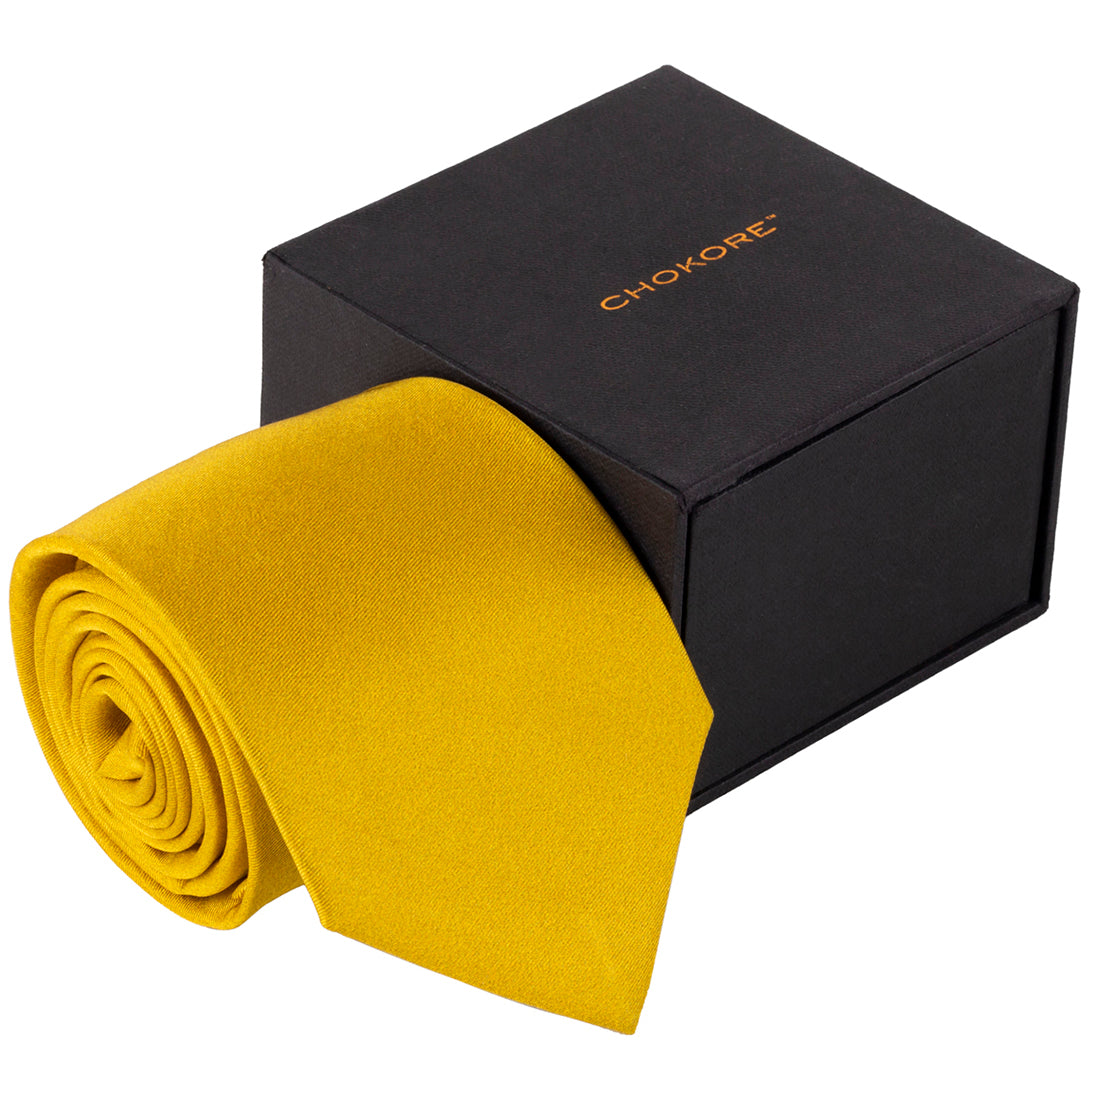 Chokore Yellow Silk Tie - Solids range